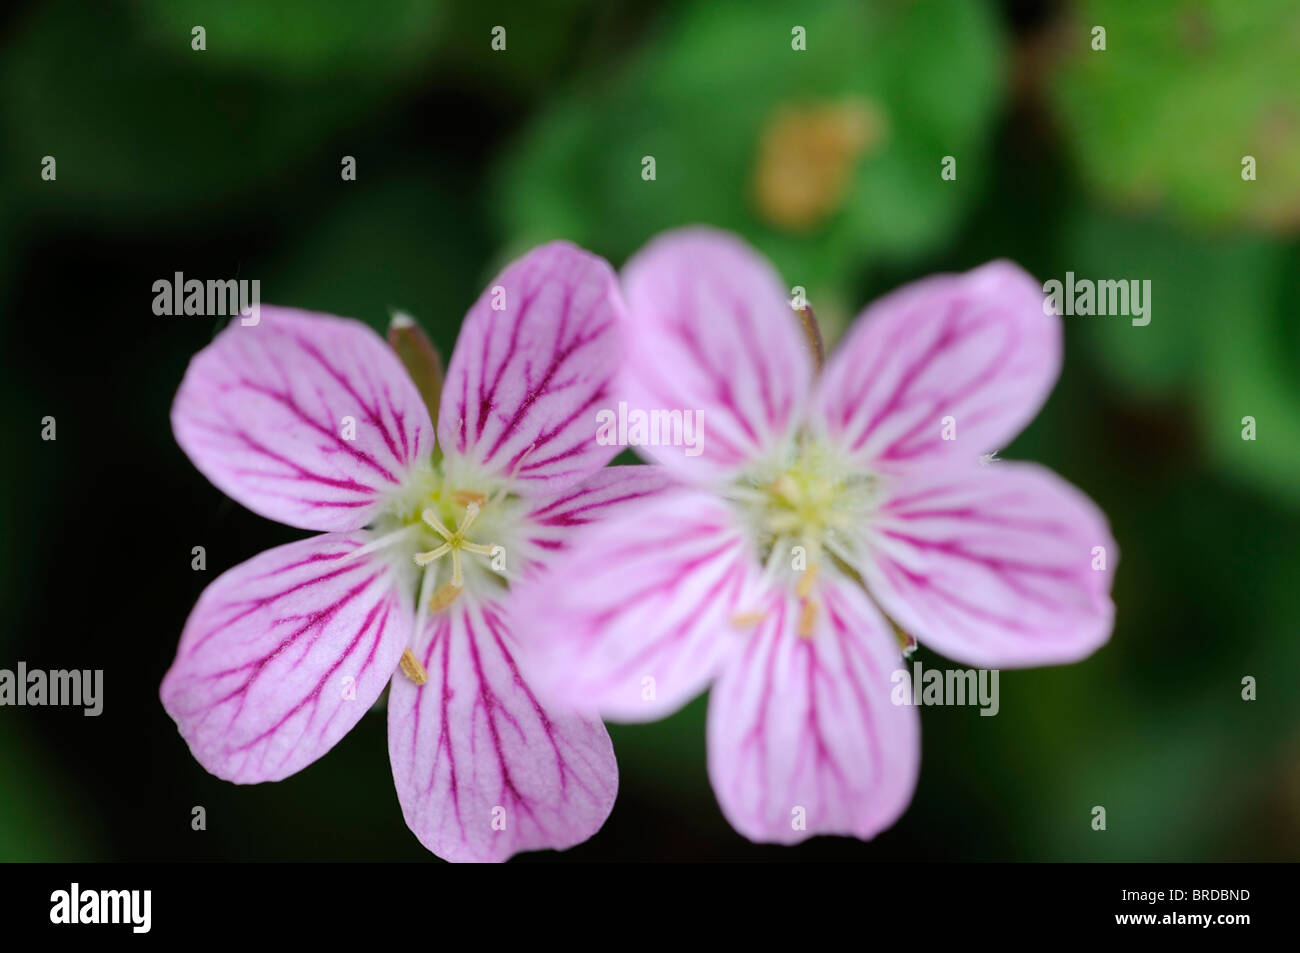 Erodium reichardii Cultivar Roseum heronsbill geranium alpine pink flower green leafy background Stock Photo